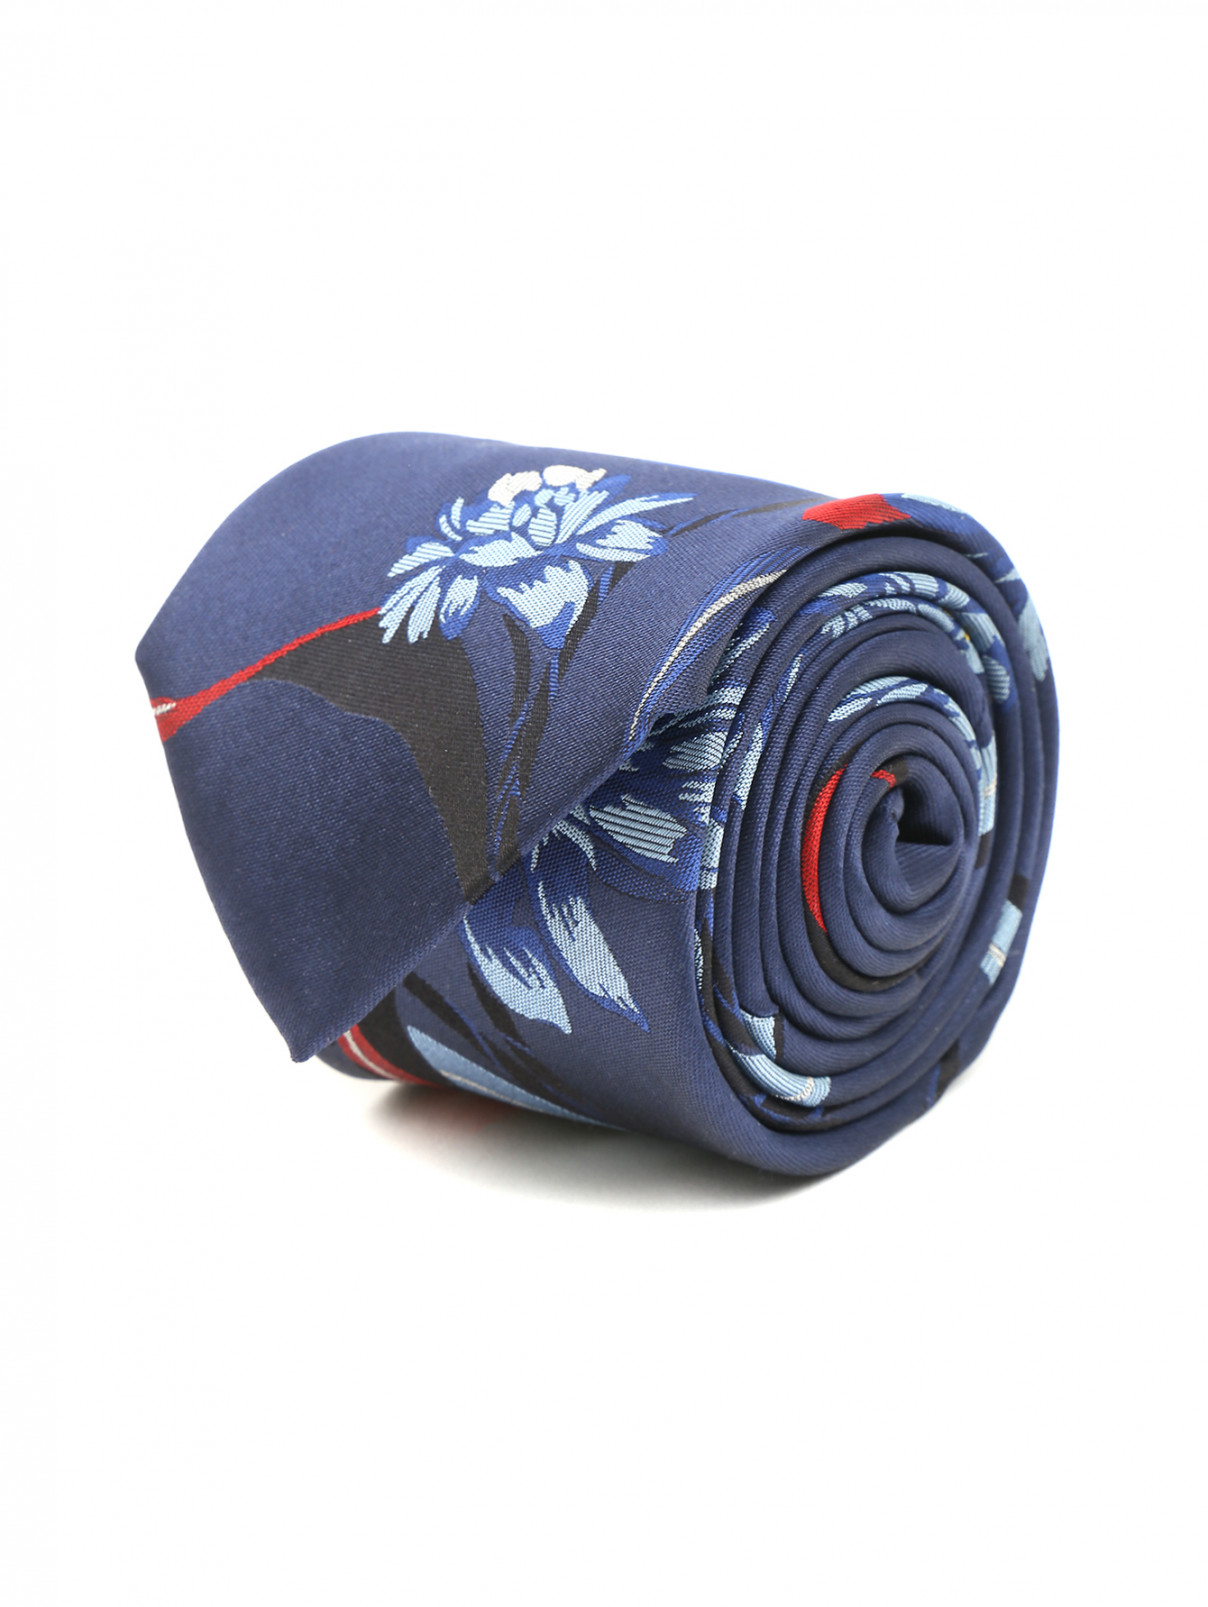 Галстук из шелка с узором Paul Smith  –  Общий вид  – Цвет:  Синий